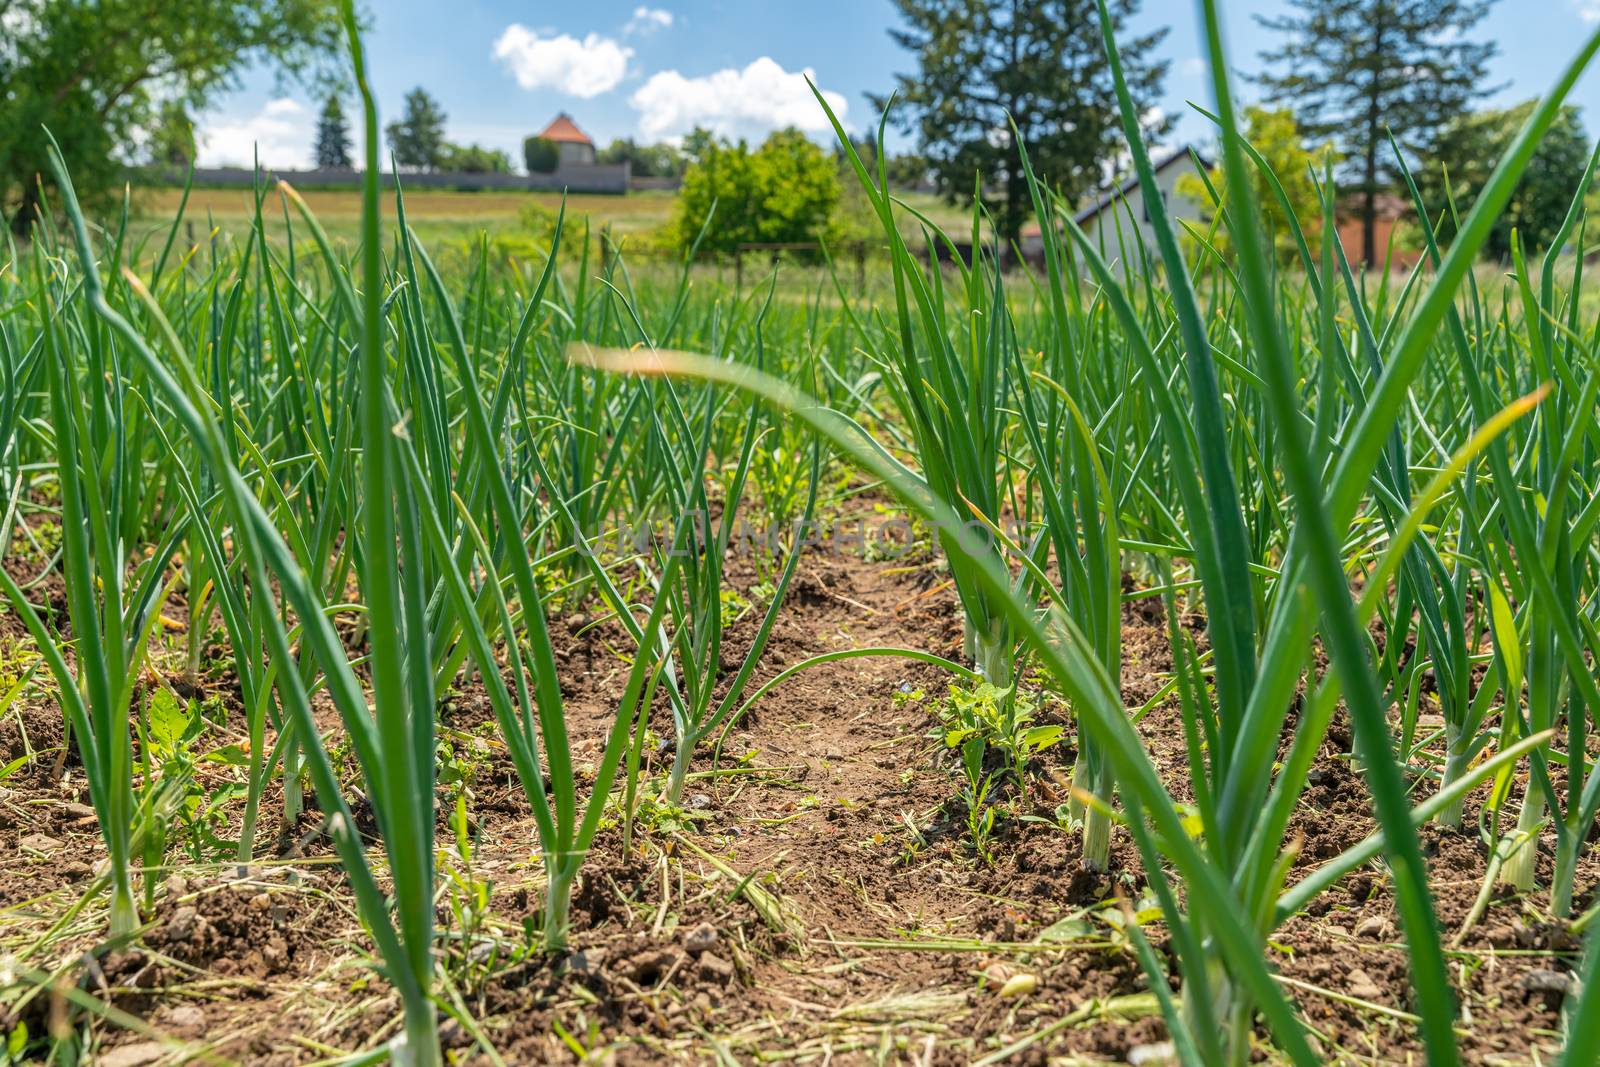 growing organic onions on a pesticide-free farm by Edophoto